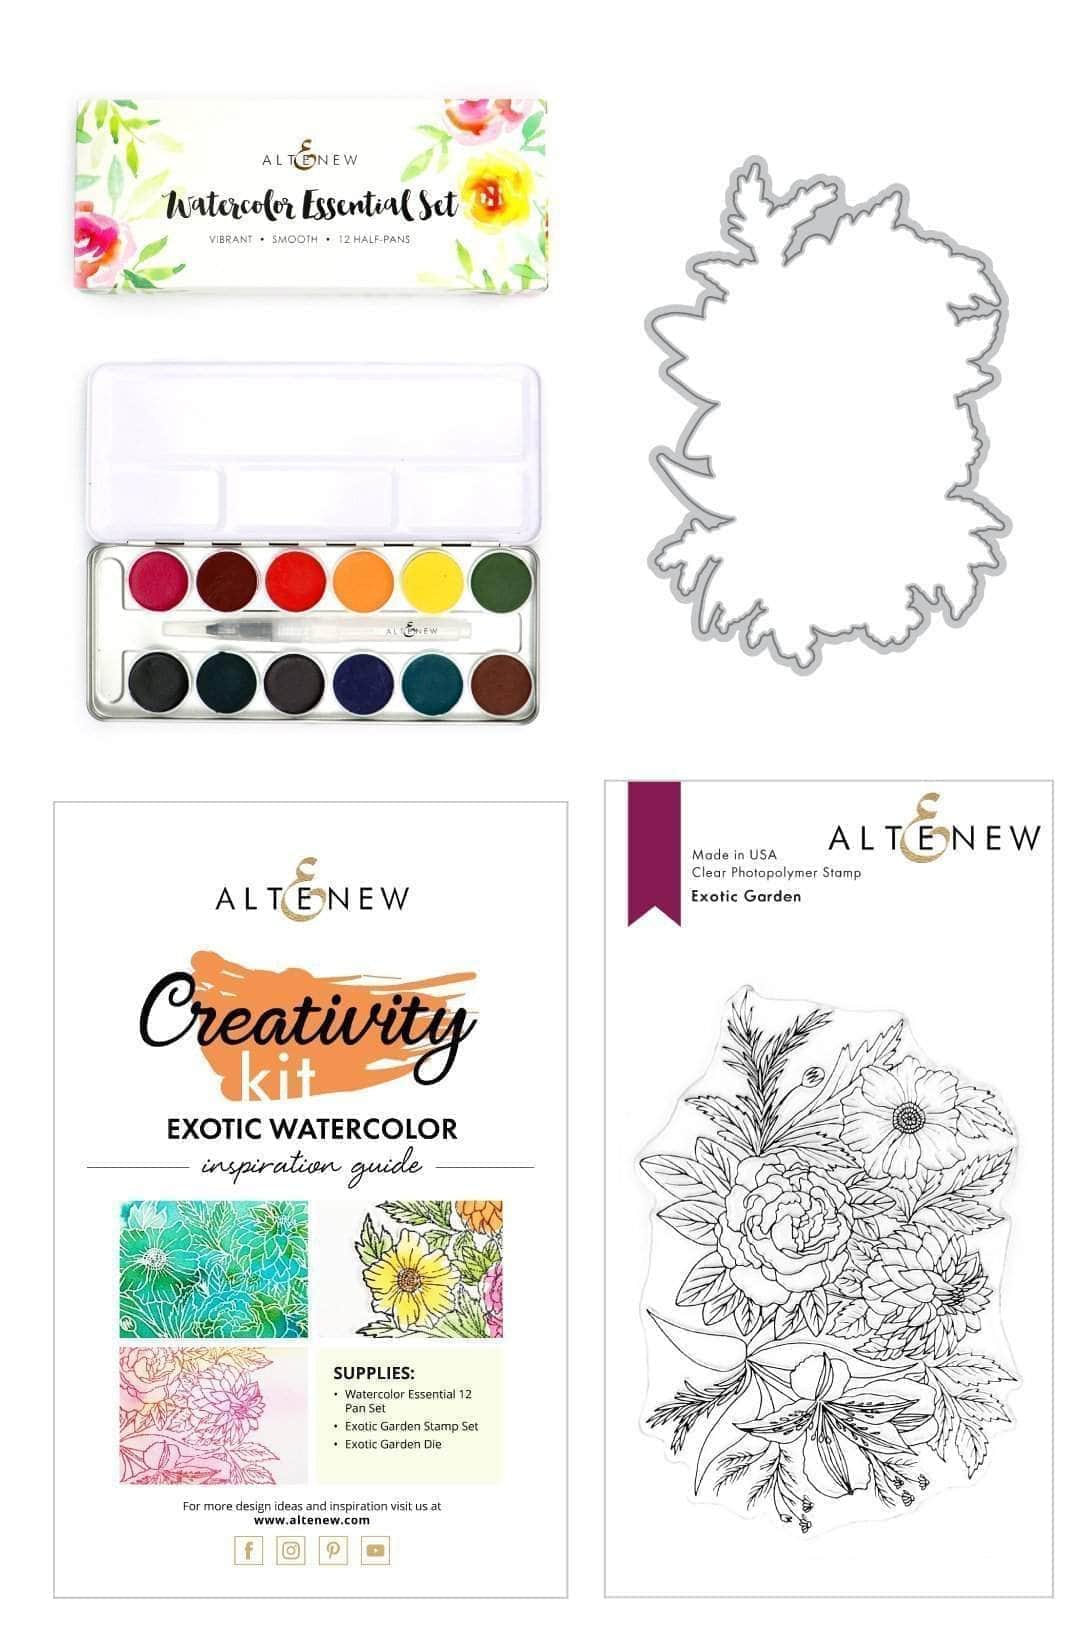 Altenew Creativity Kit Bundle Exotic Watercolor Creativity Cardmaking Kit